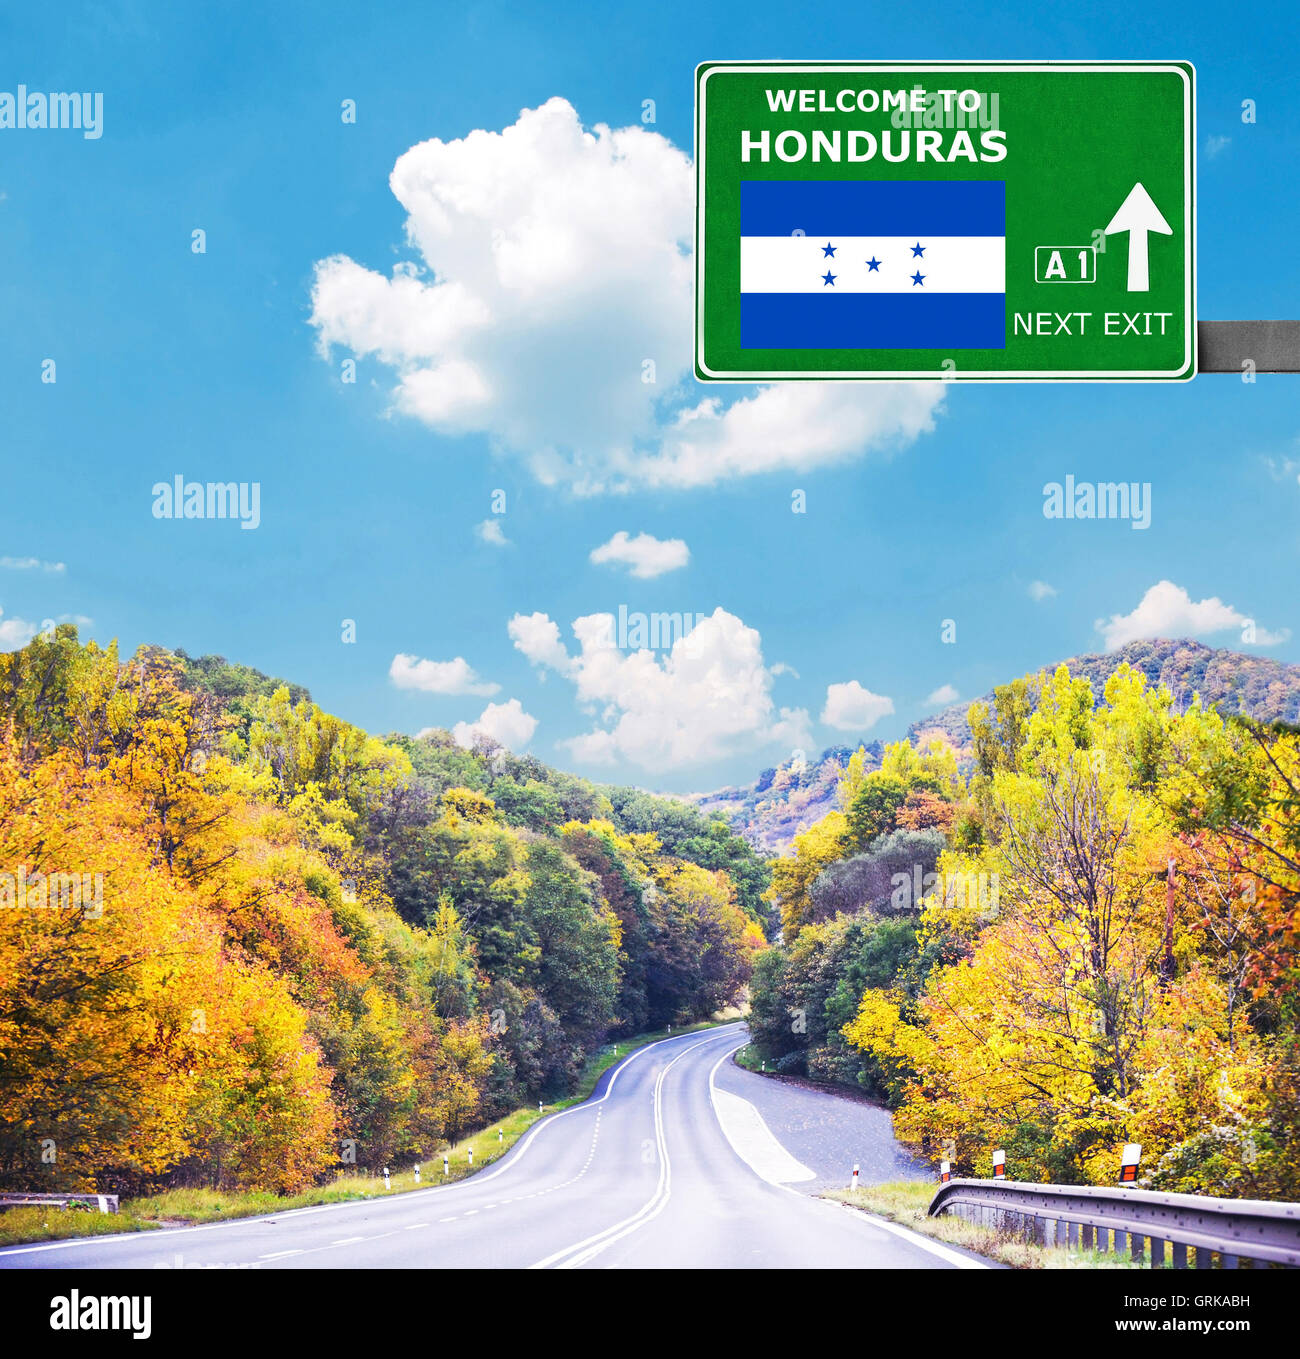 Honduras-Schild gegen klar blauen Himmel Stockfoto